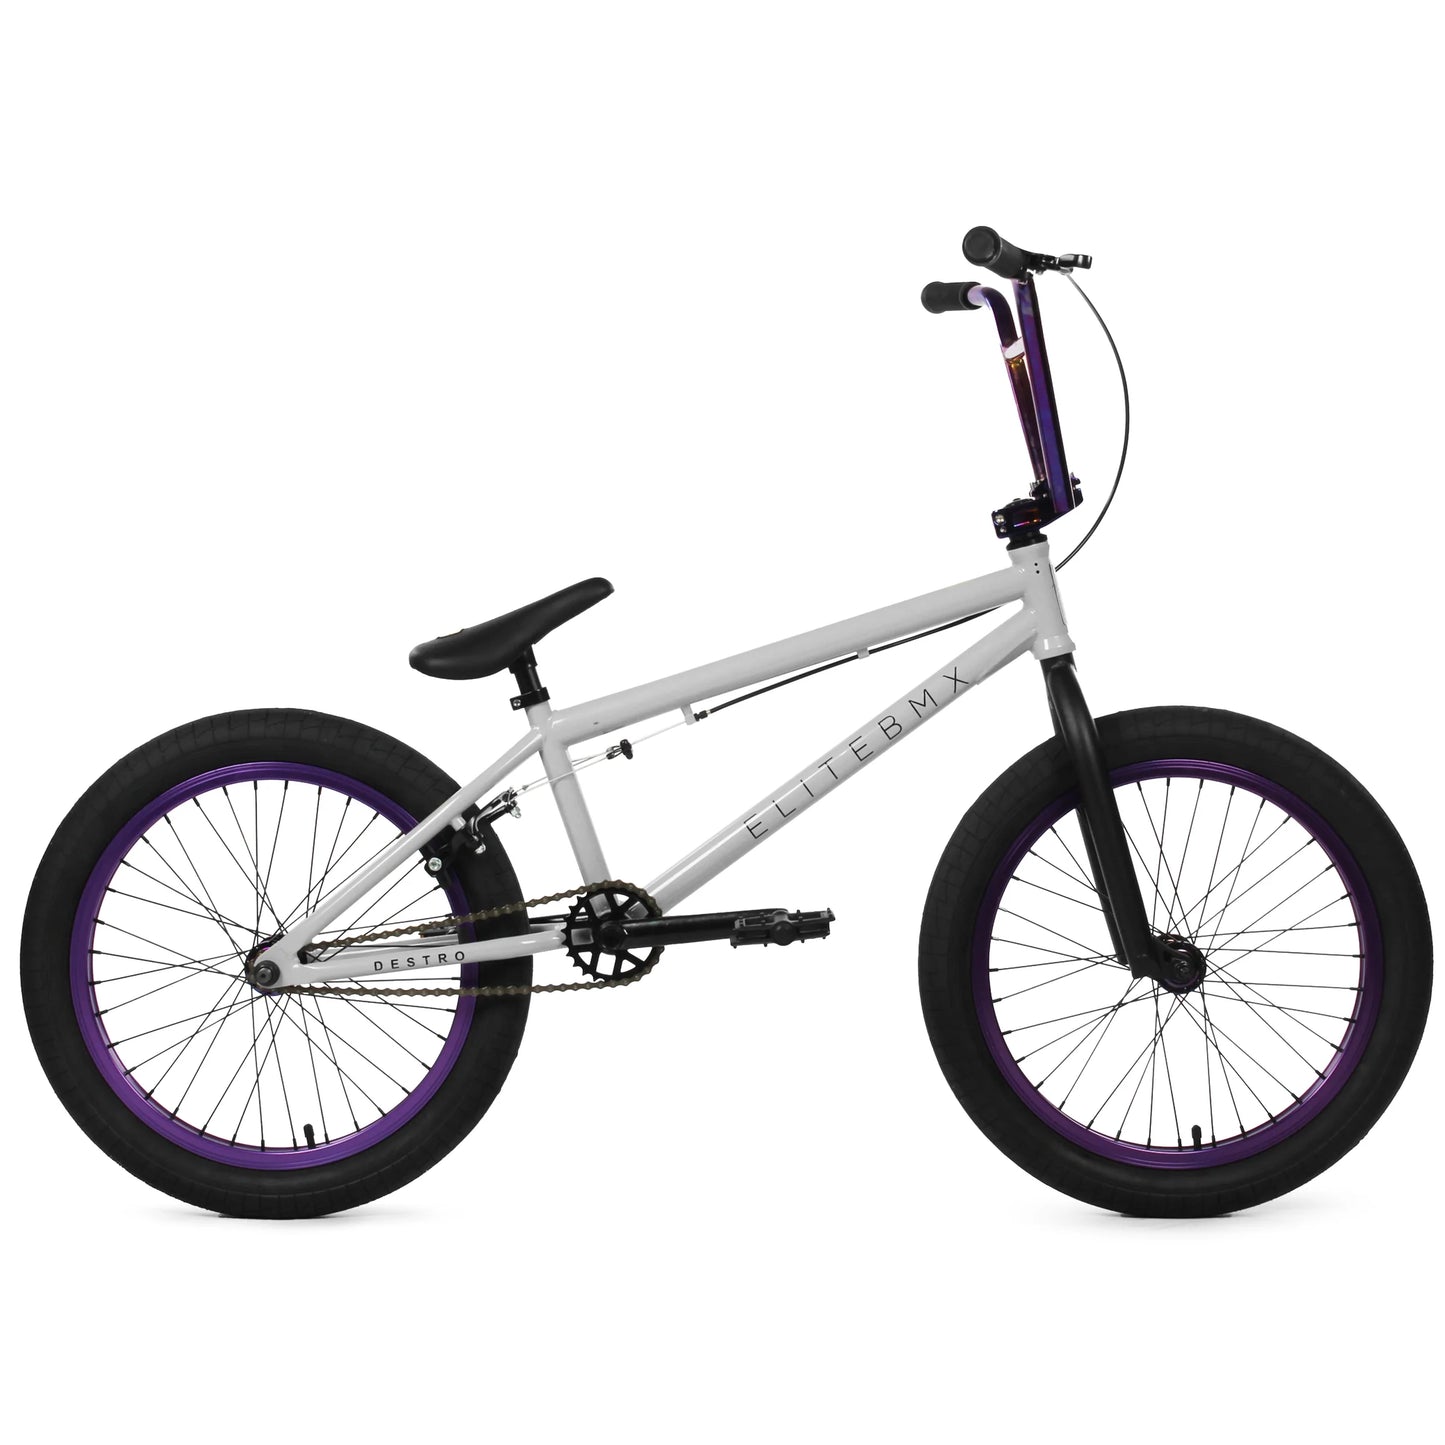 Destro BMX Bike - Grey Purple | Elite BMX Destro Bikes | Desto Bike | Elite BMX Bike | BMX Bikes | Elite Bikes | Affordable Bikes | Affordable BMX Bikes | Bike Lovers USA